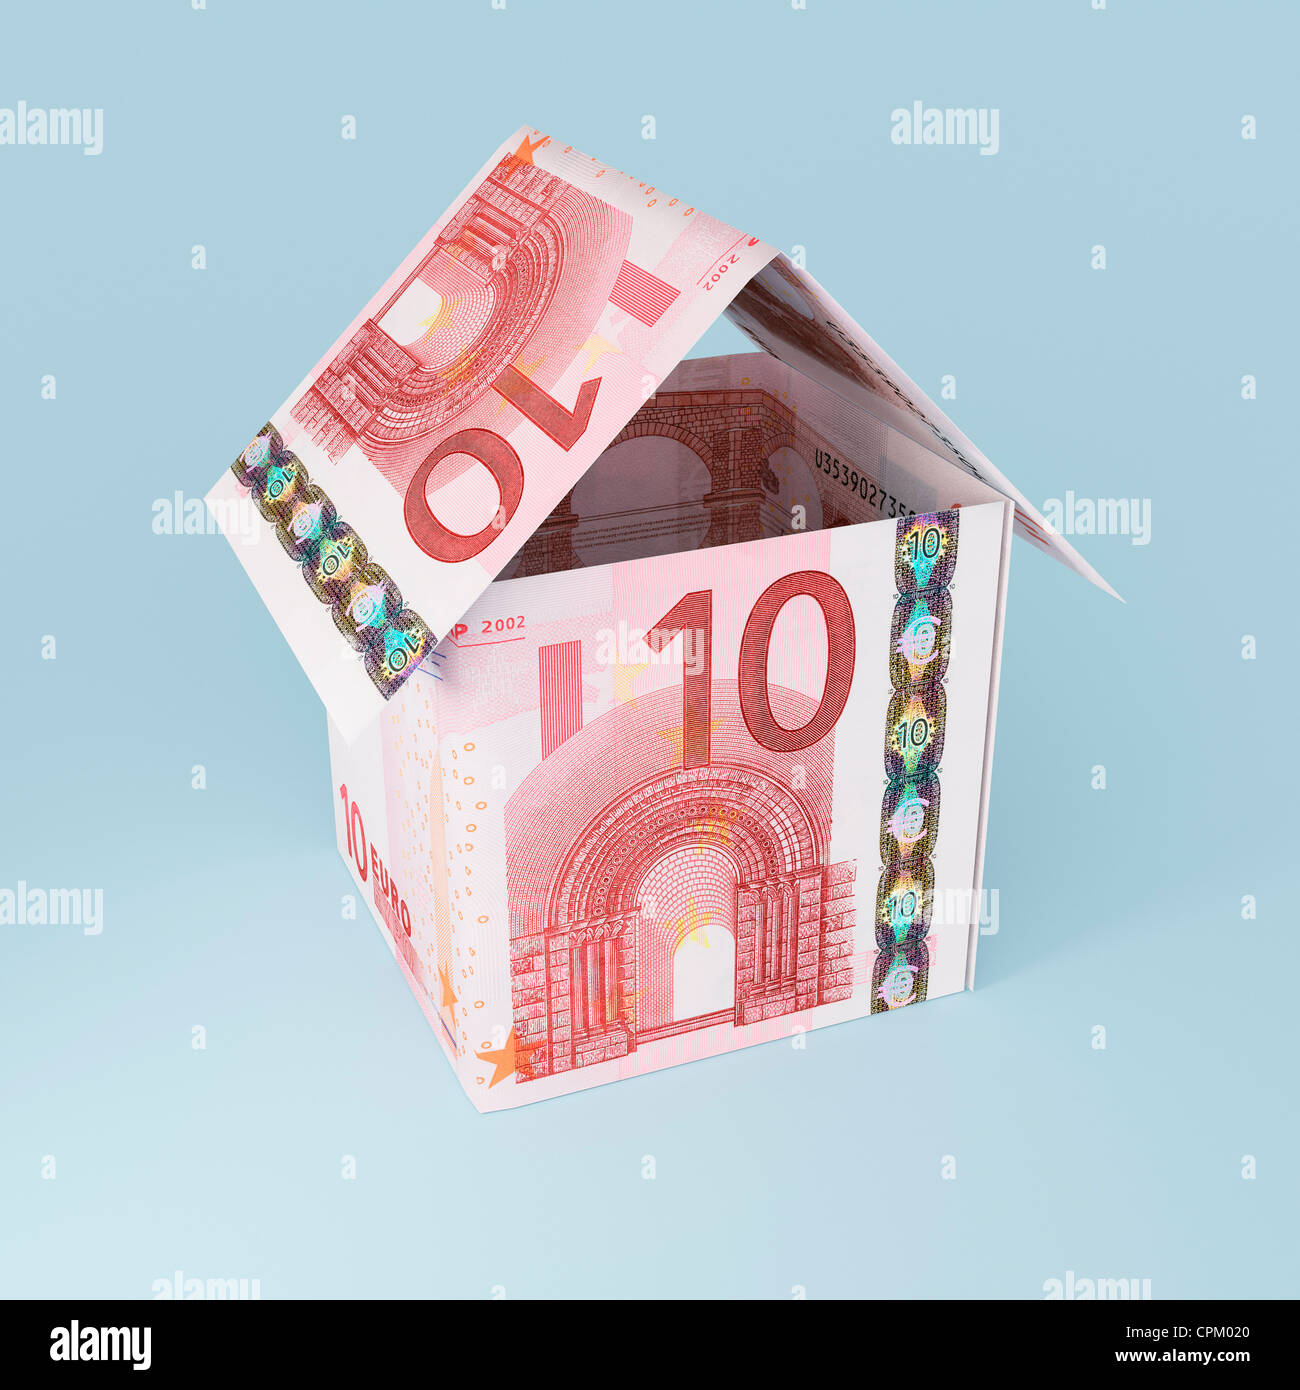 Money house made with Euros Stock Photo